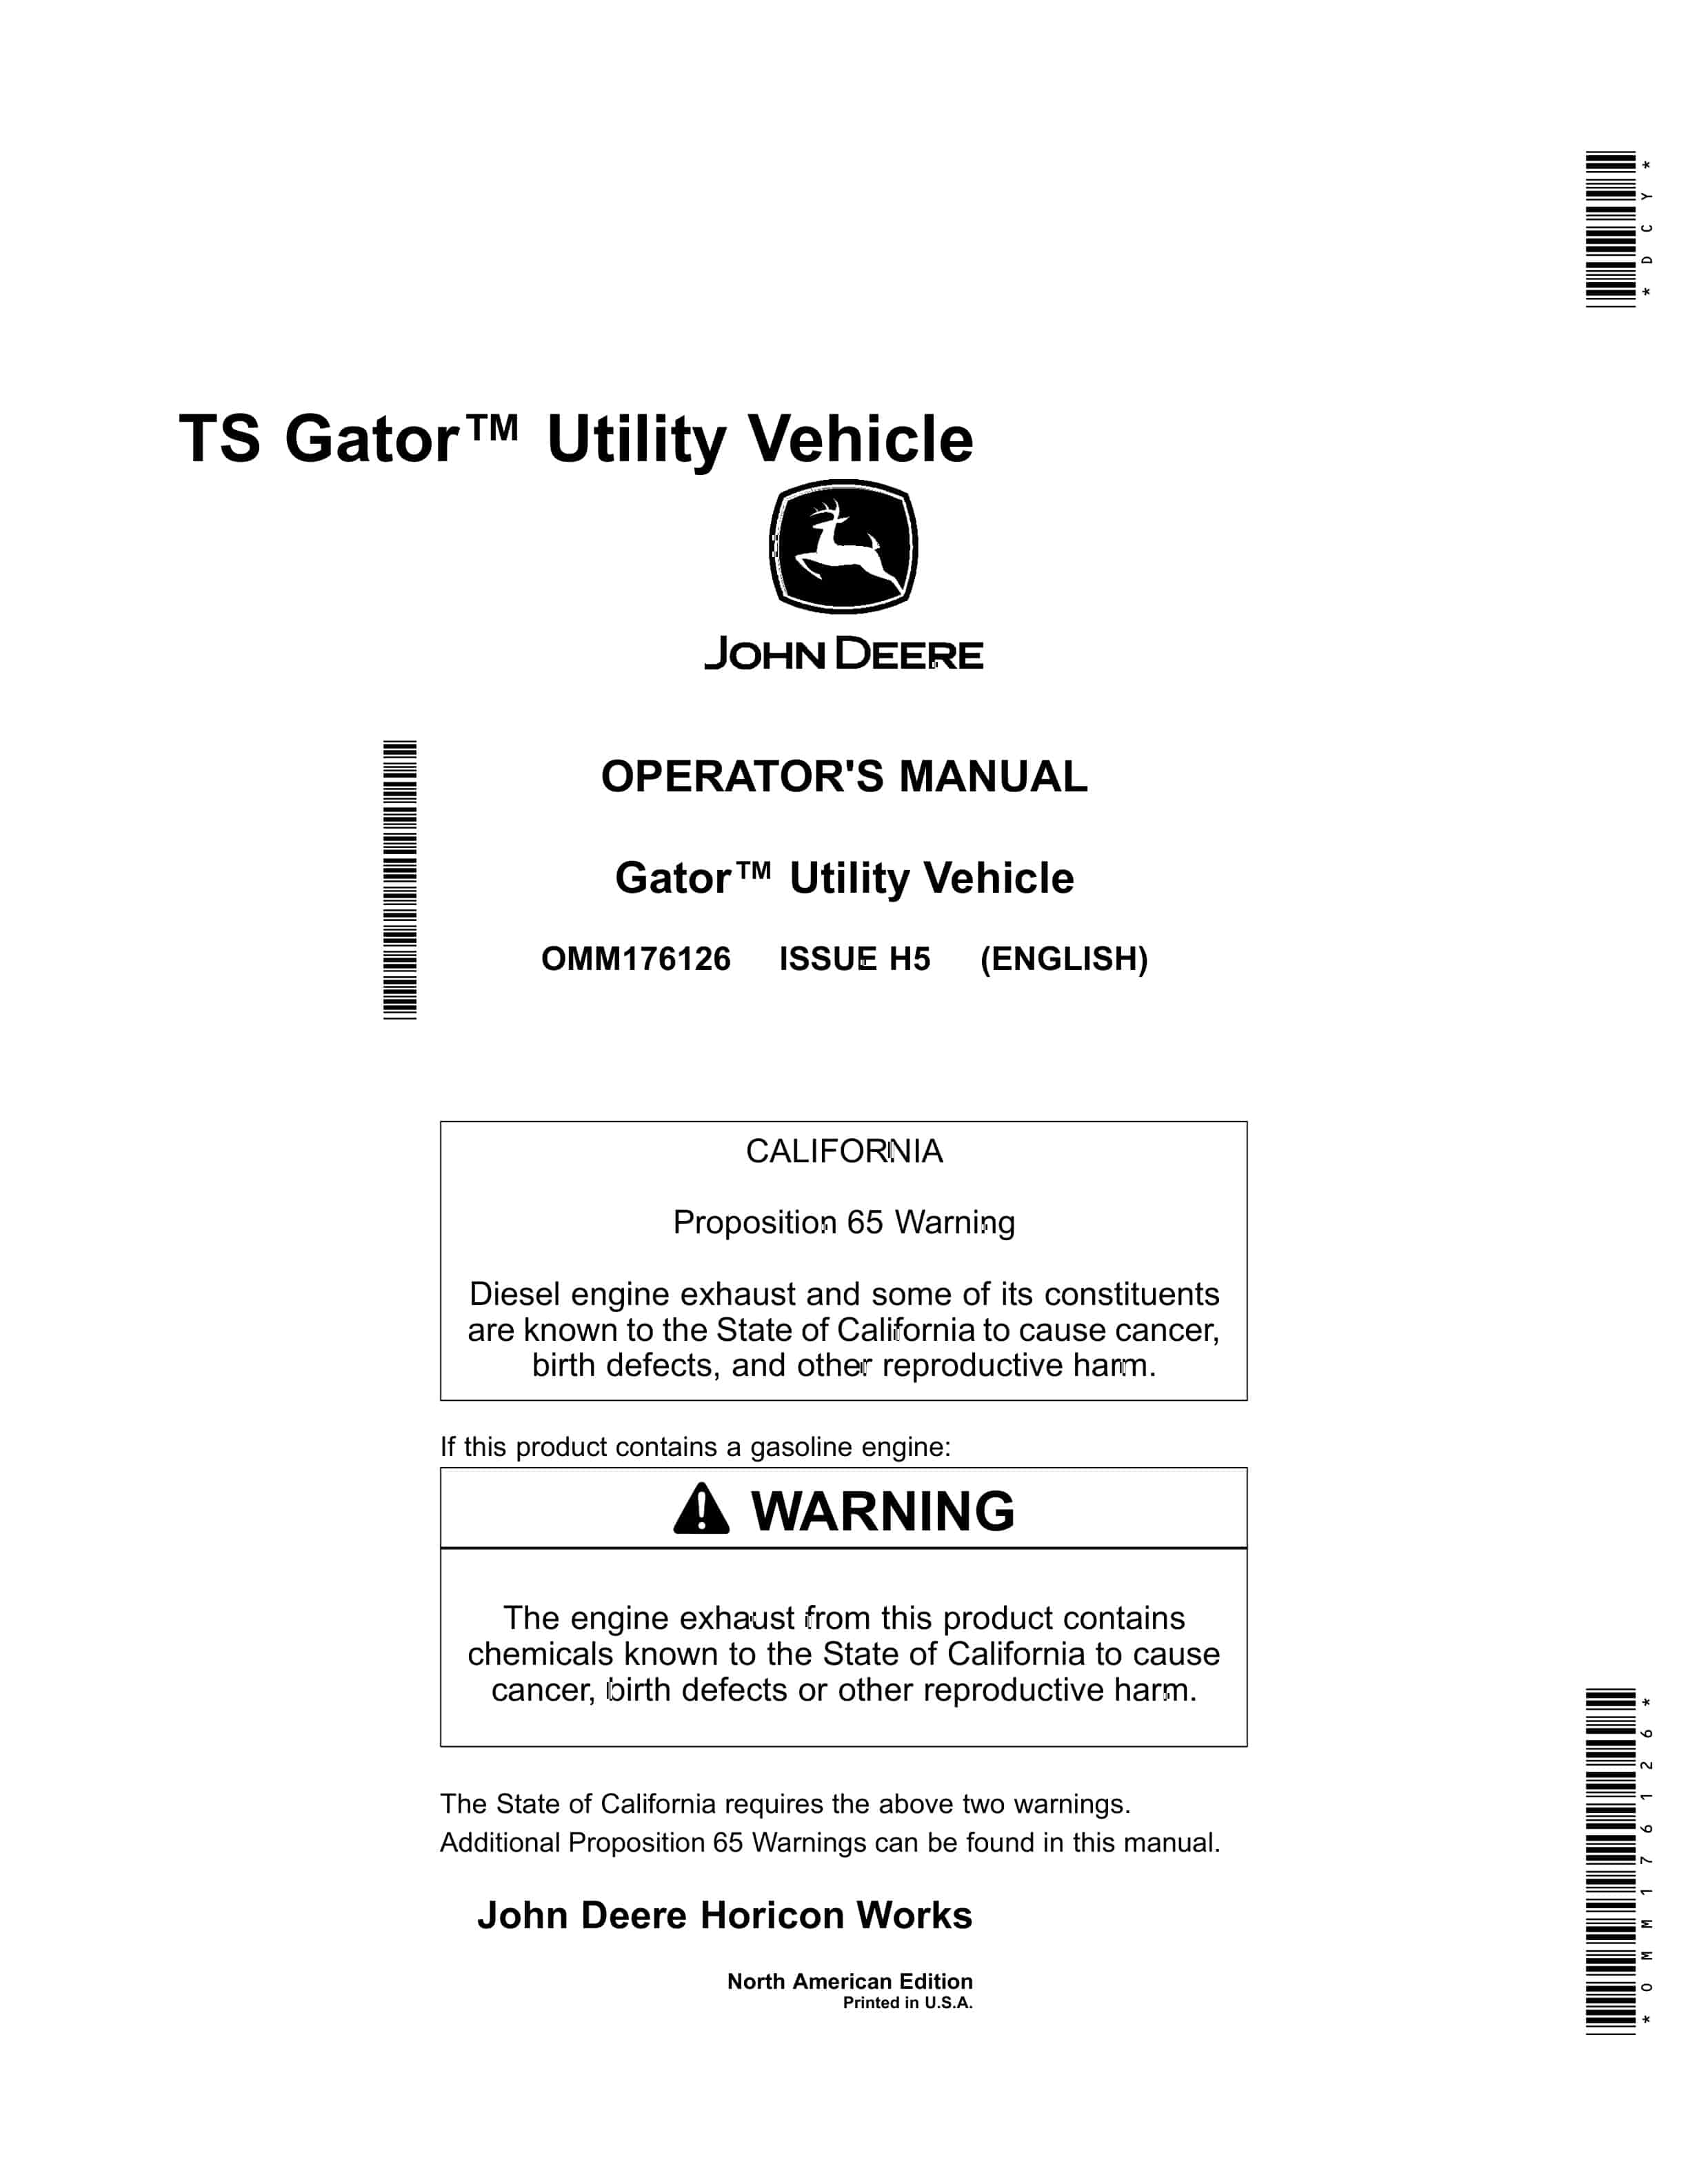 John Deere TS Gator Utility Vehicles Operator Manual OMM176126 1